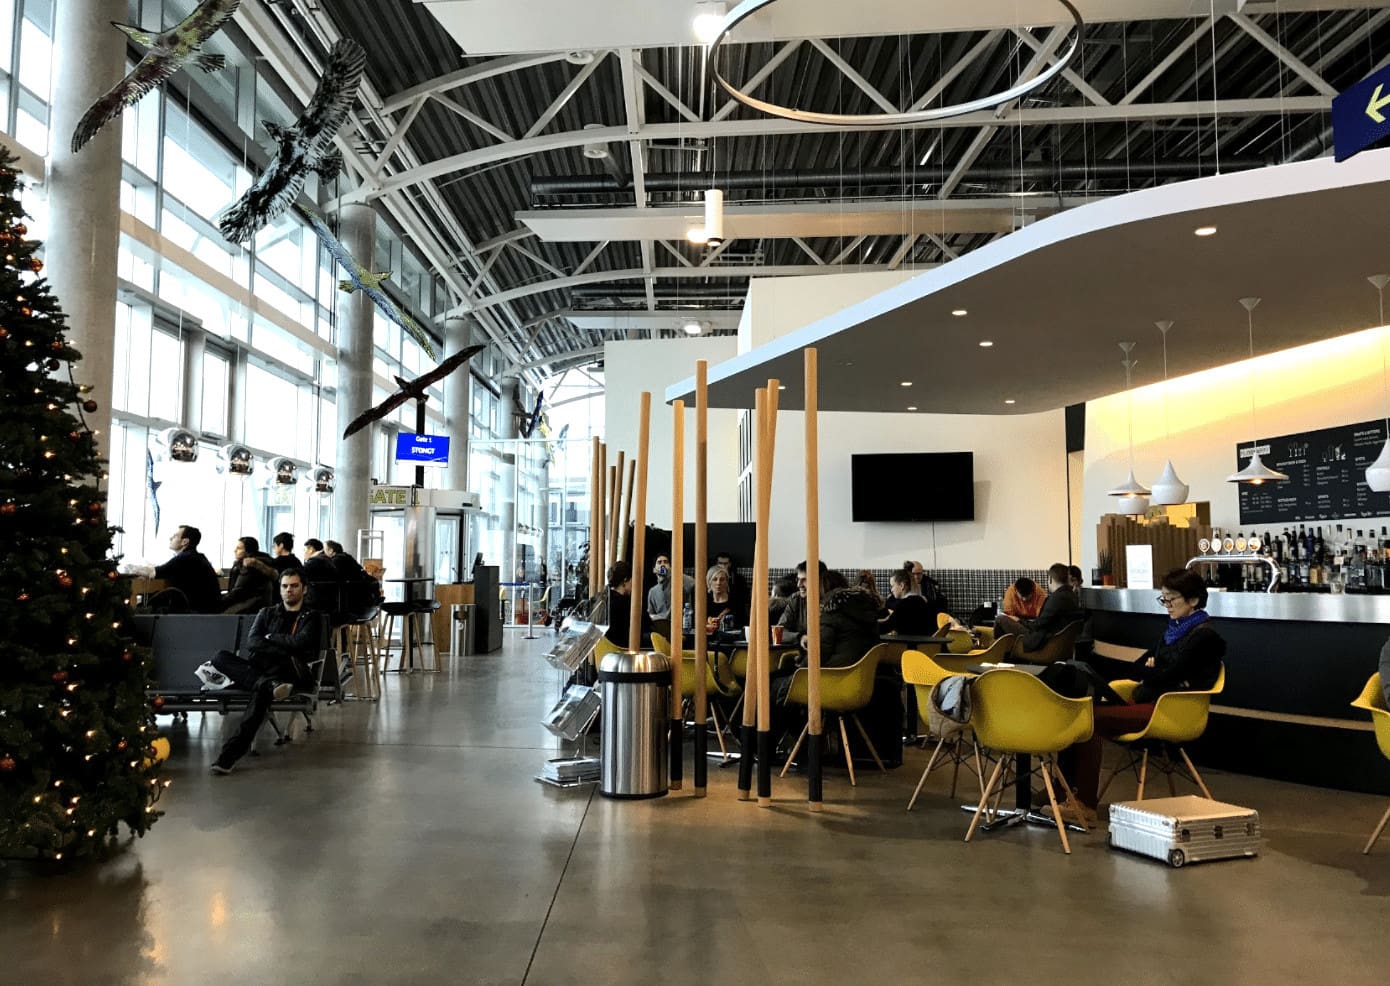 Vagar Airport departures hall